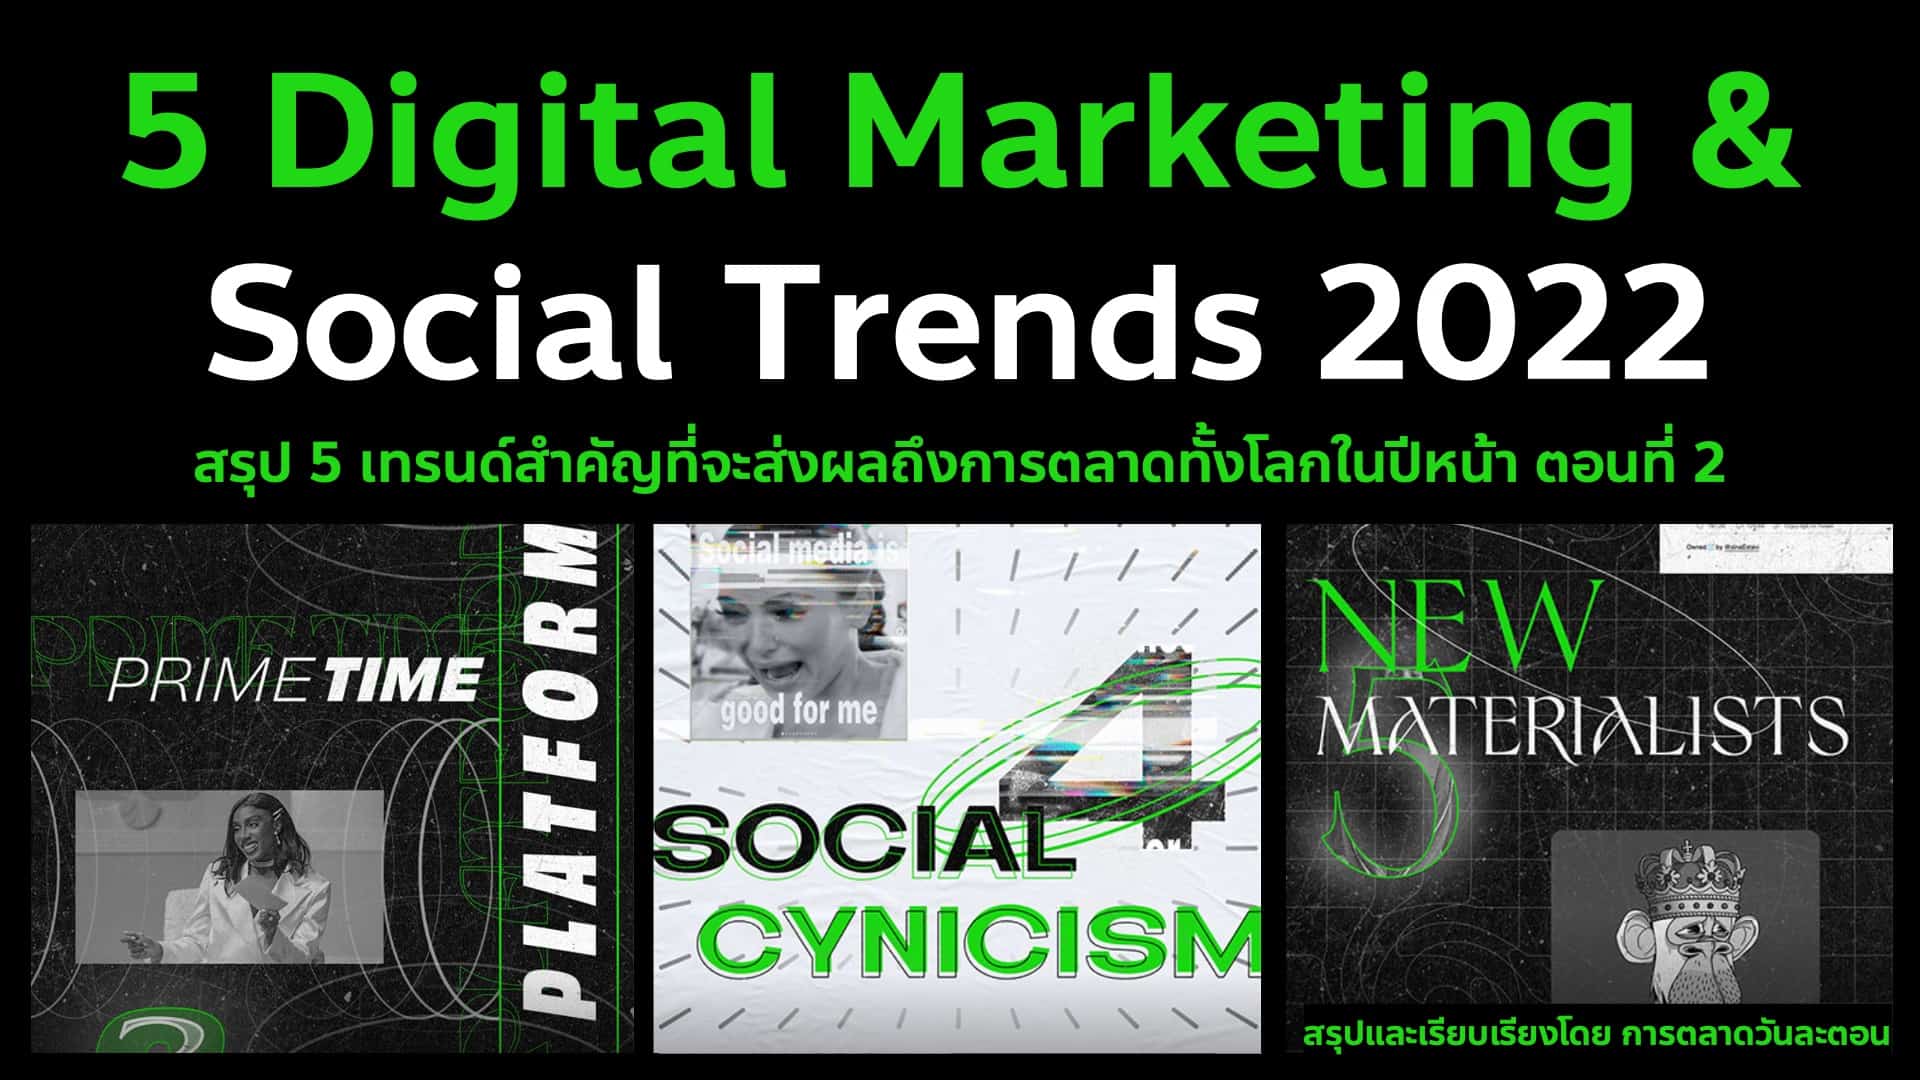 5 Digital Marketing & Social Trends 2022 ตอนที่ 2 ของ We Are Social